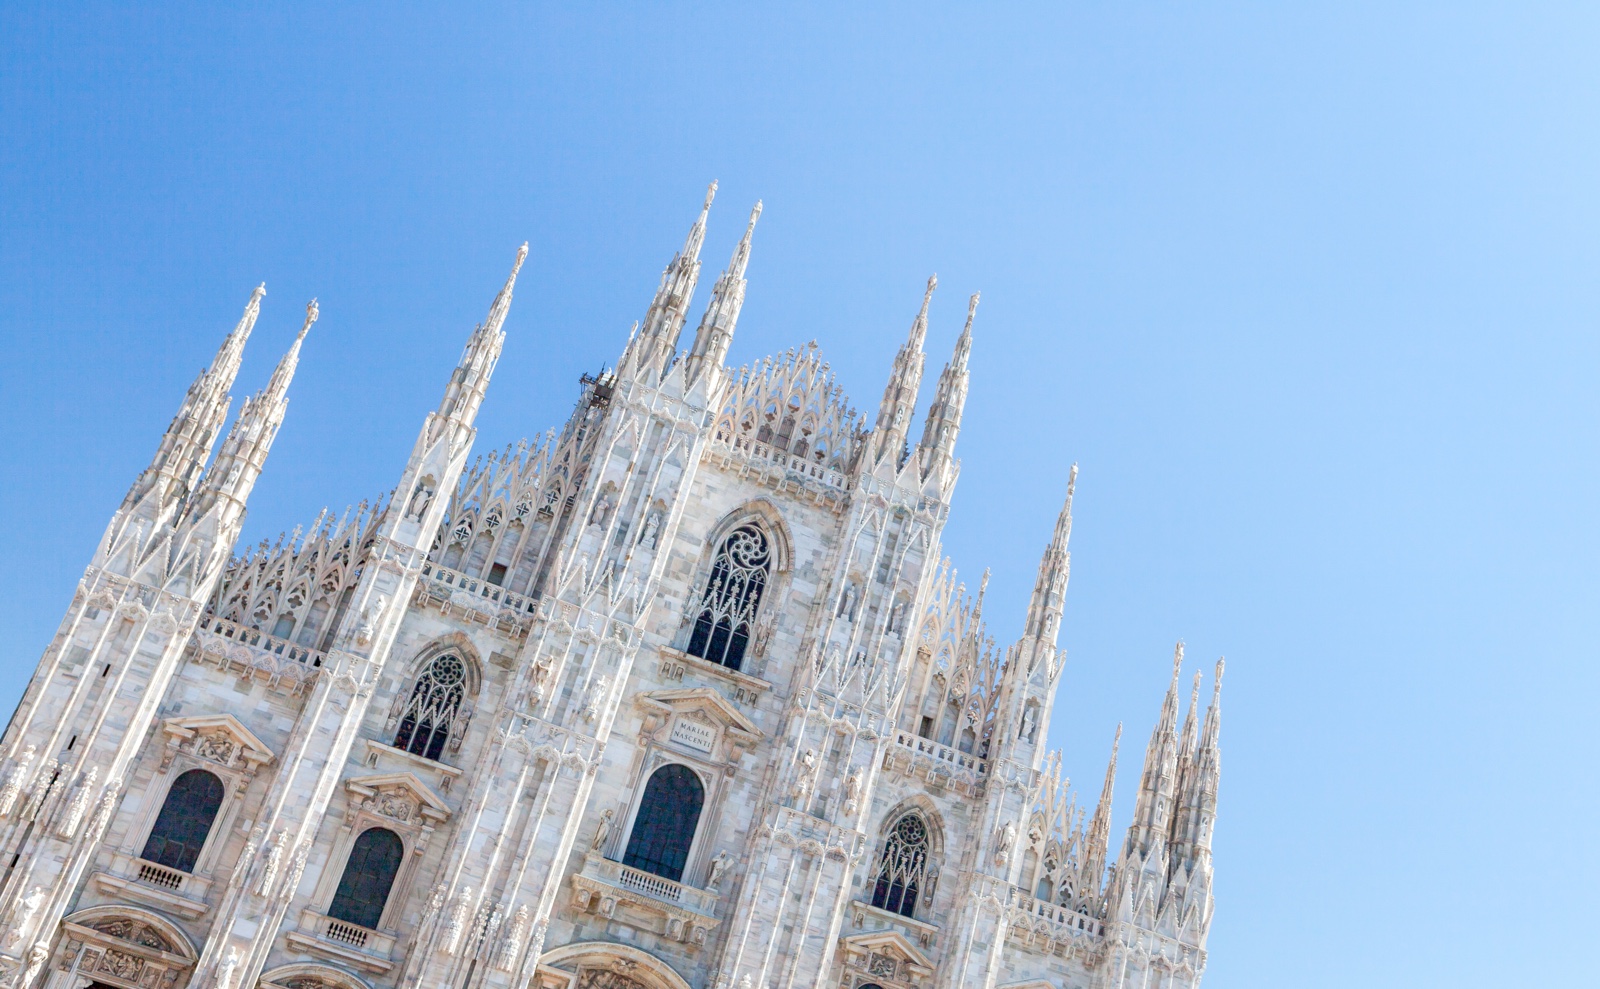 Duomo de Milan, la splendide cathédrale